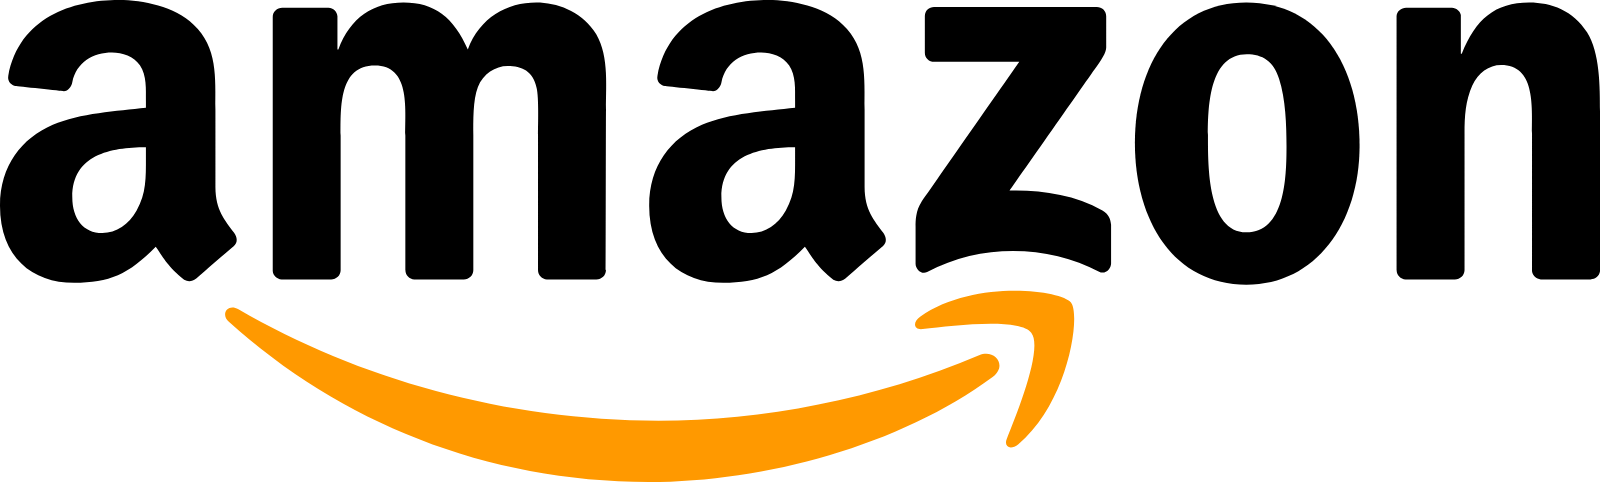 Amazon.com Inc. It companies in Houstan